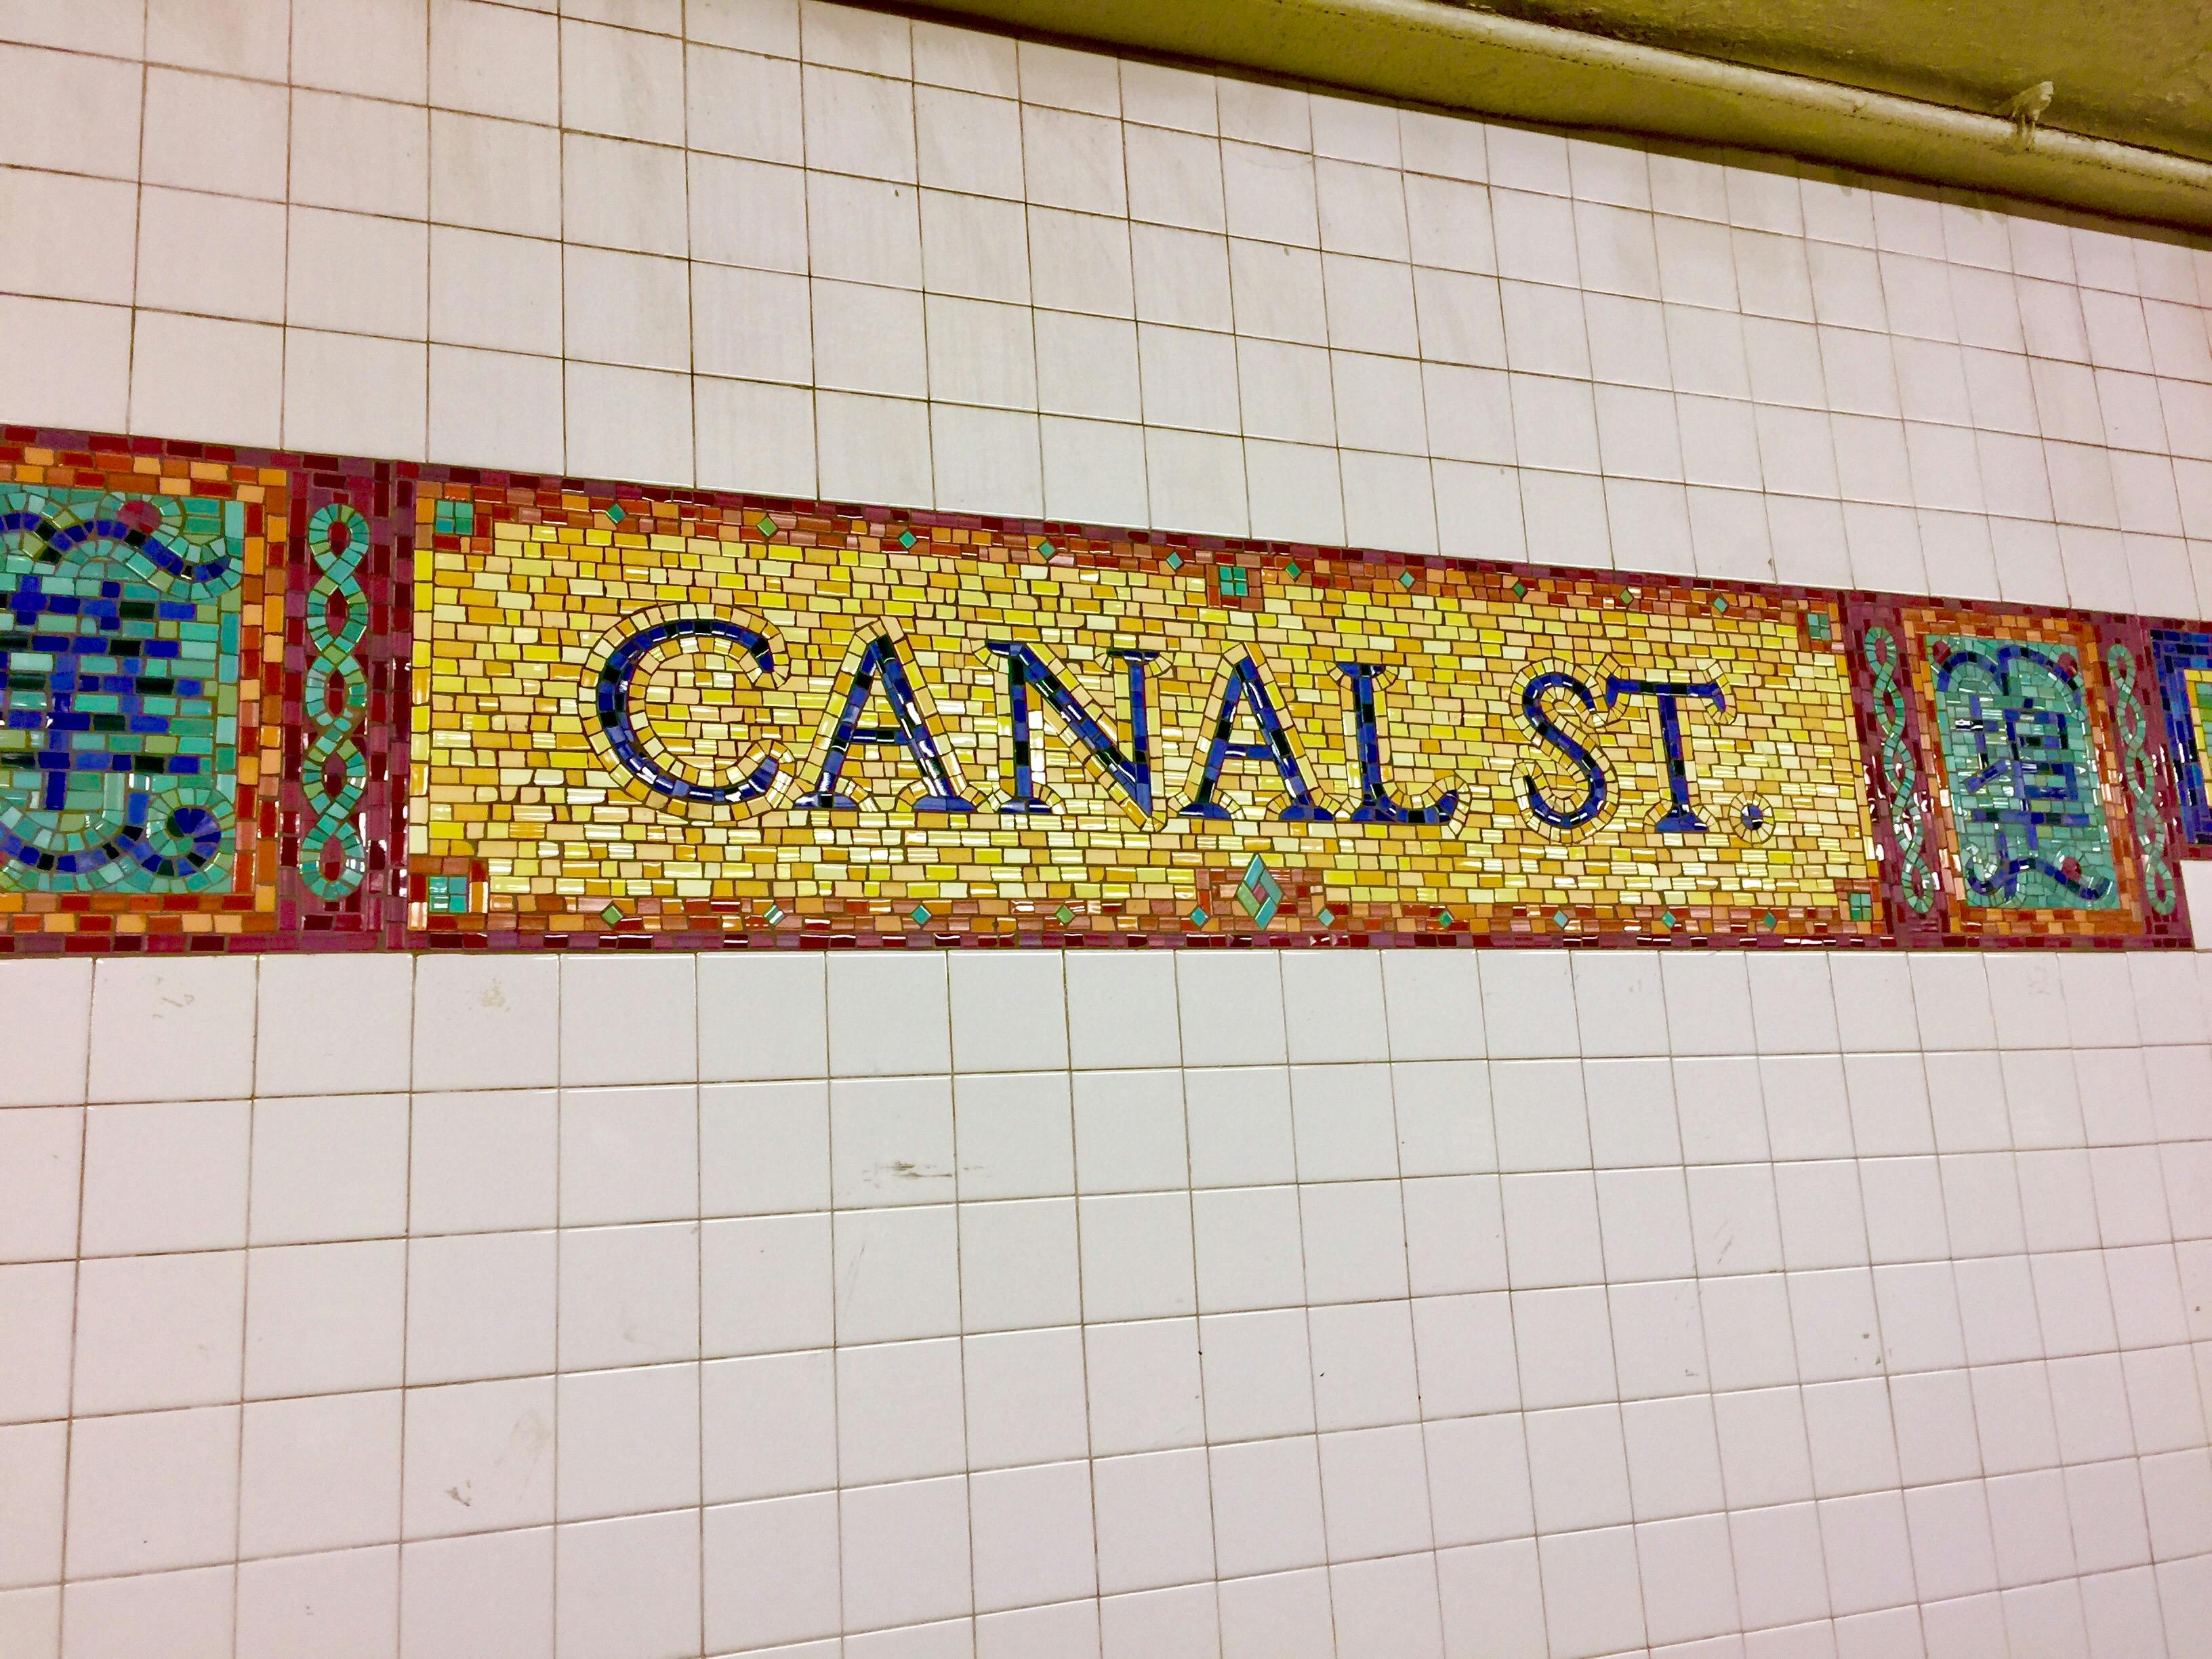 Free stock photo of canal street, New York subway, tile art